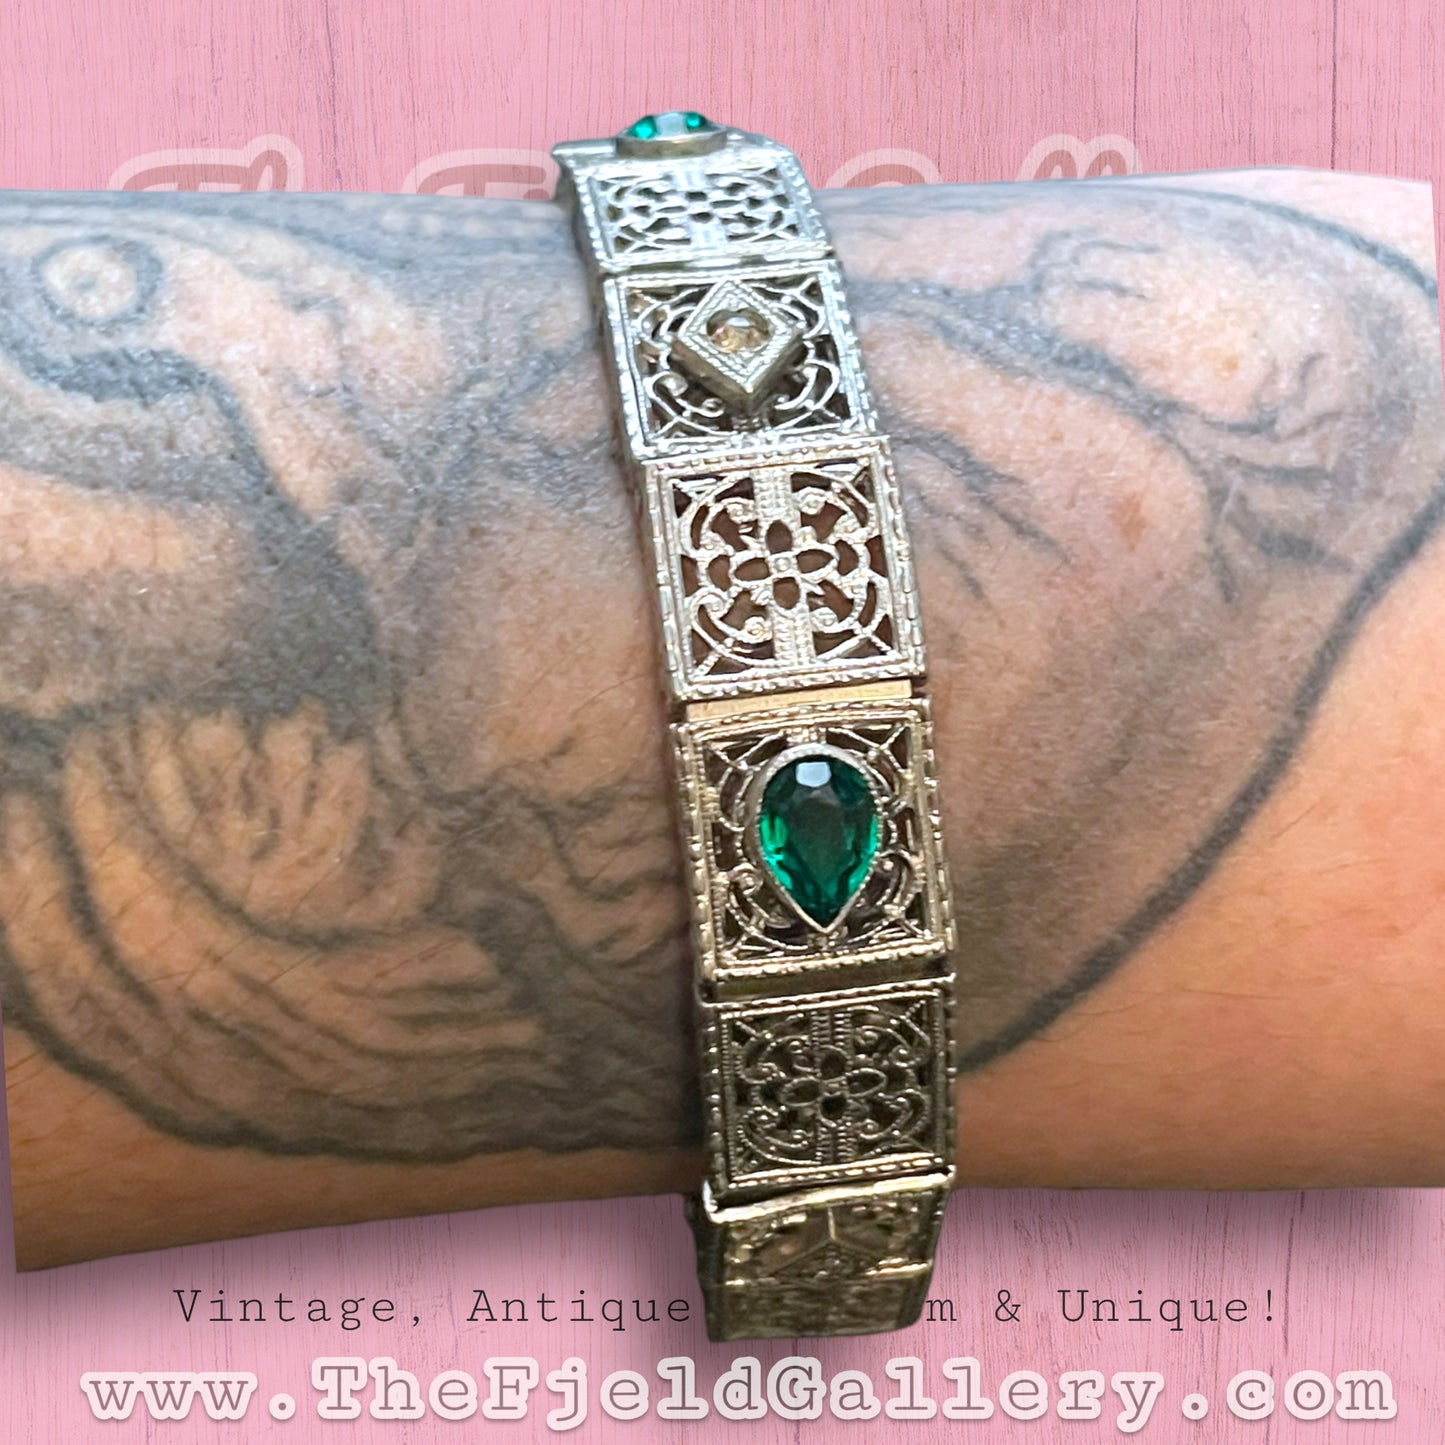 Antique Rhodium Plated Silver Filigree Bracelet with Emerald & White Crystal Bezel Set